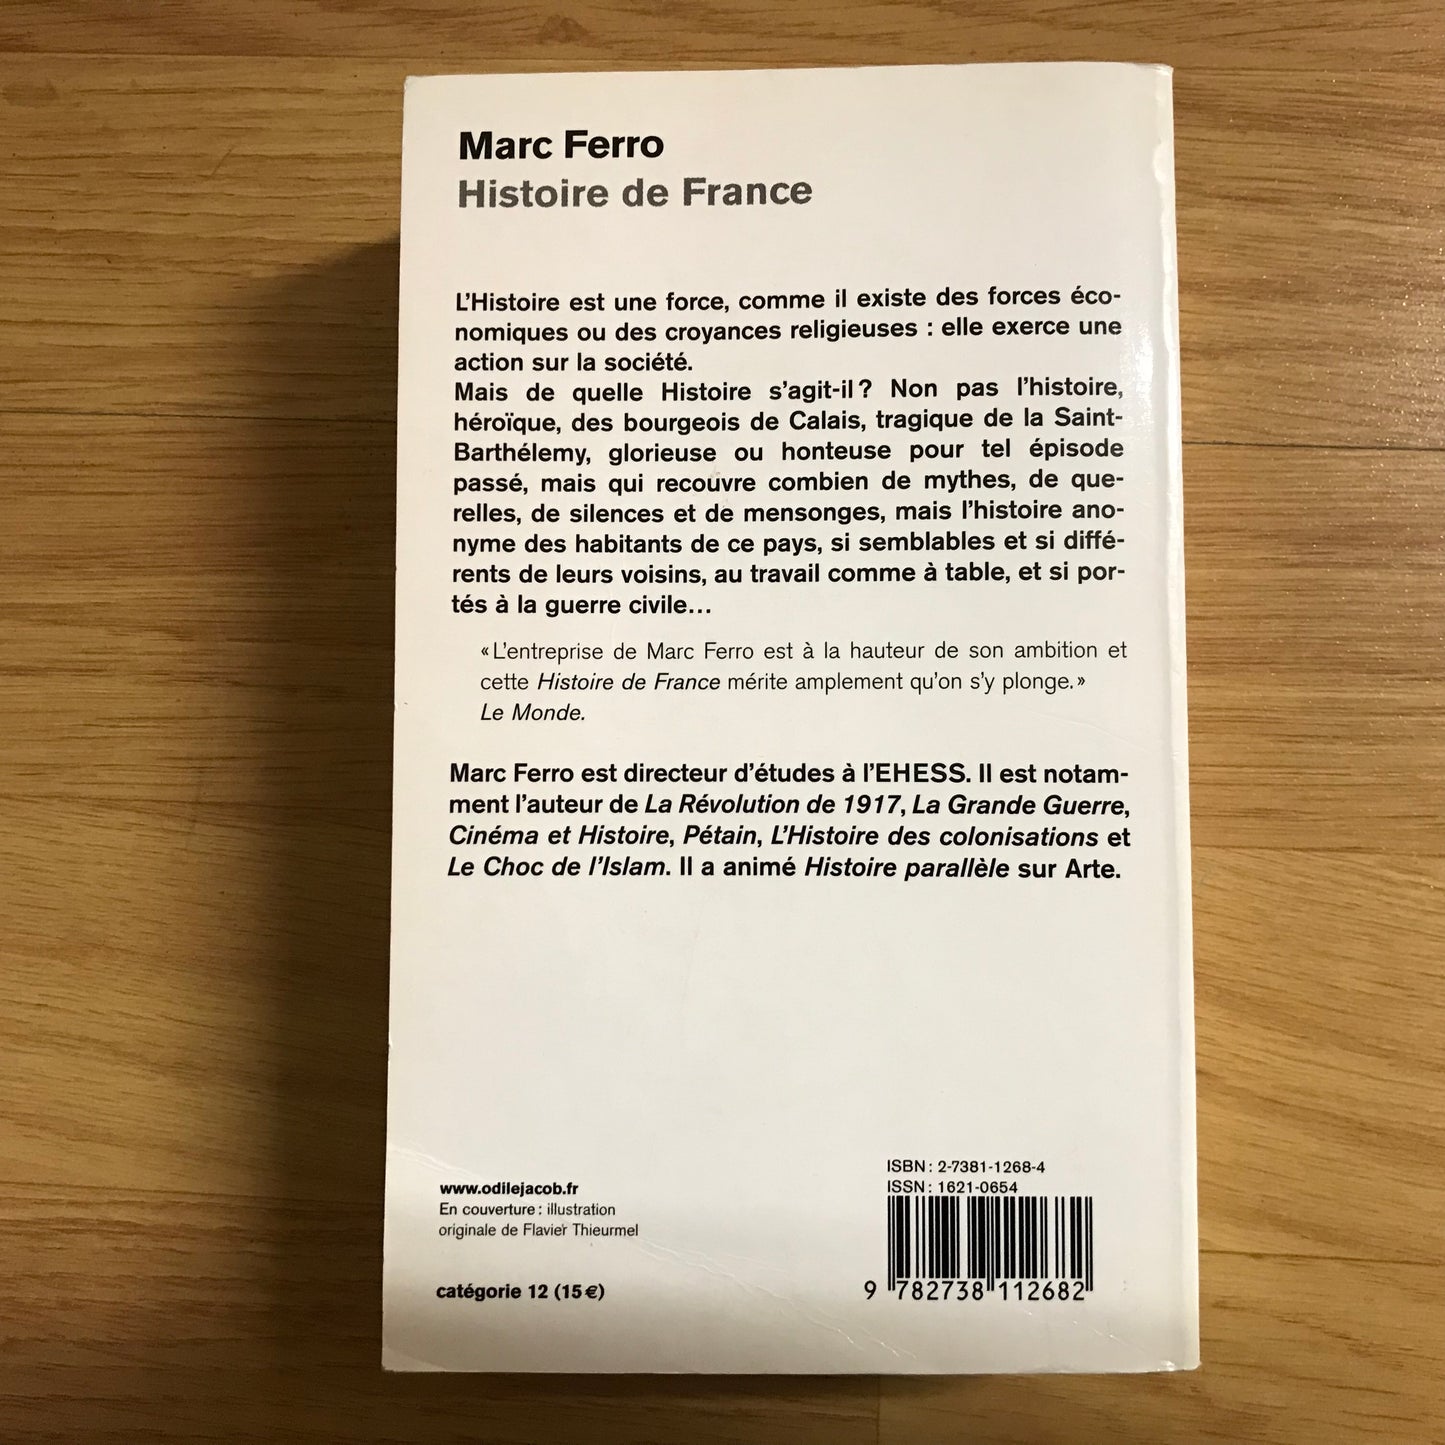 Ferro, Marc - Histoire de France